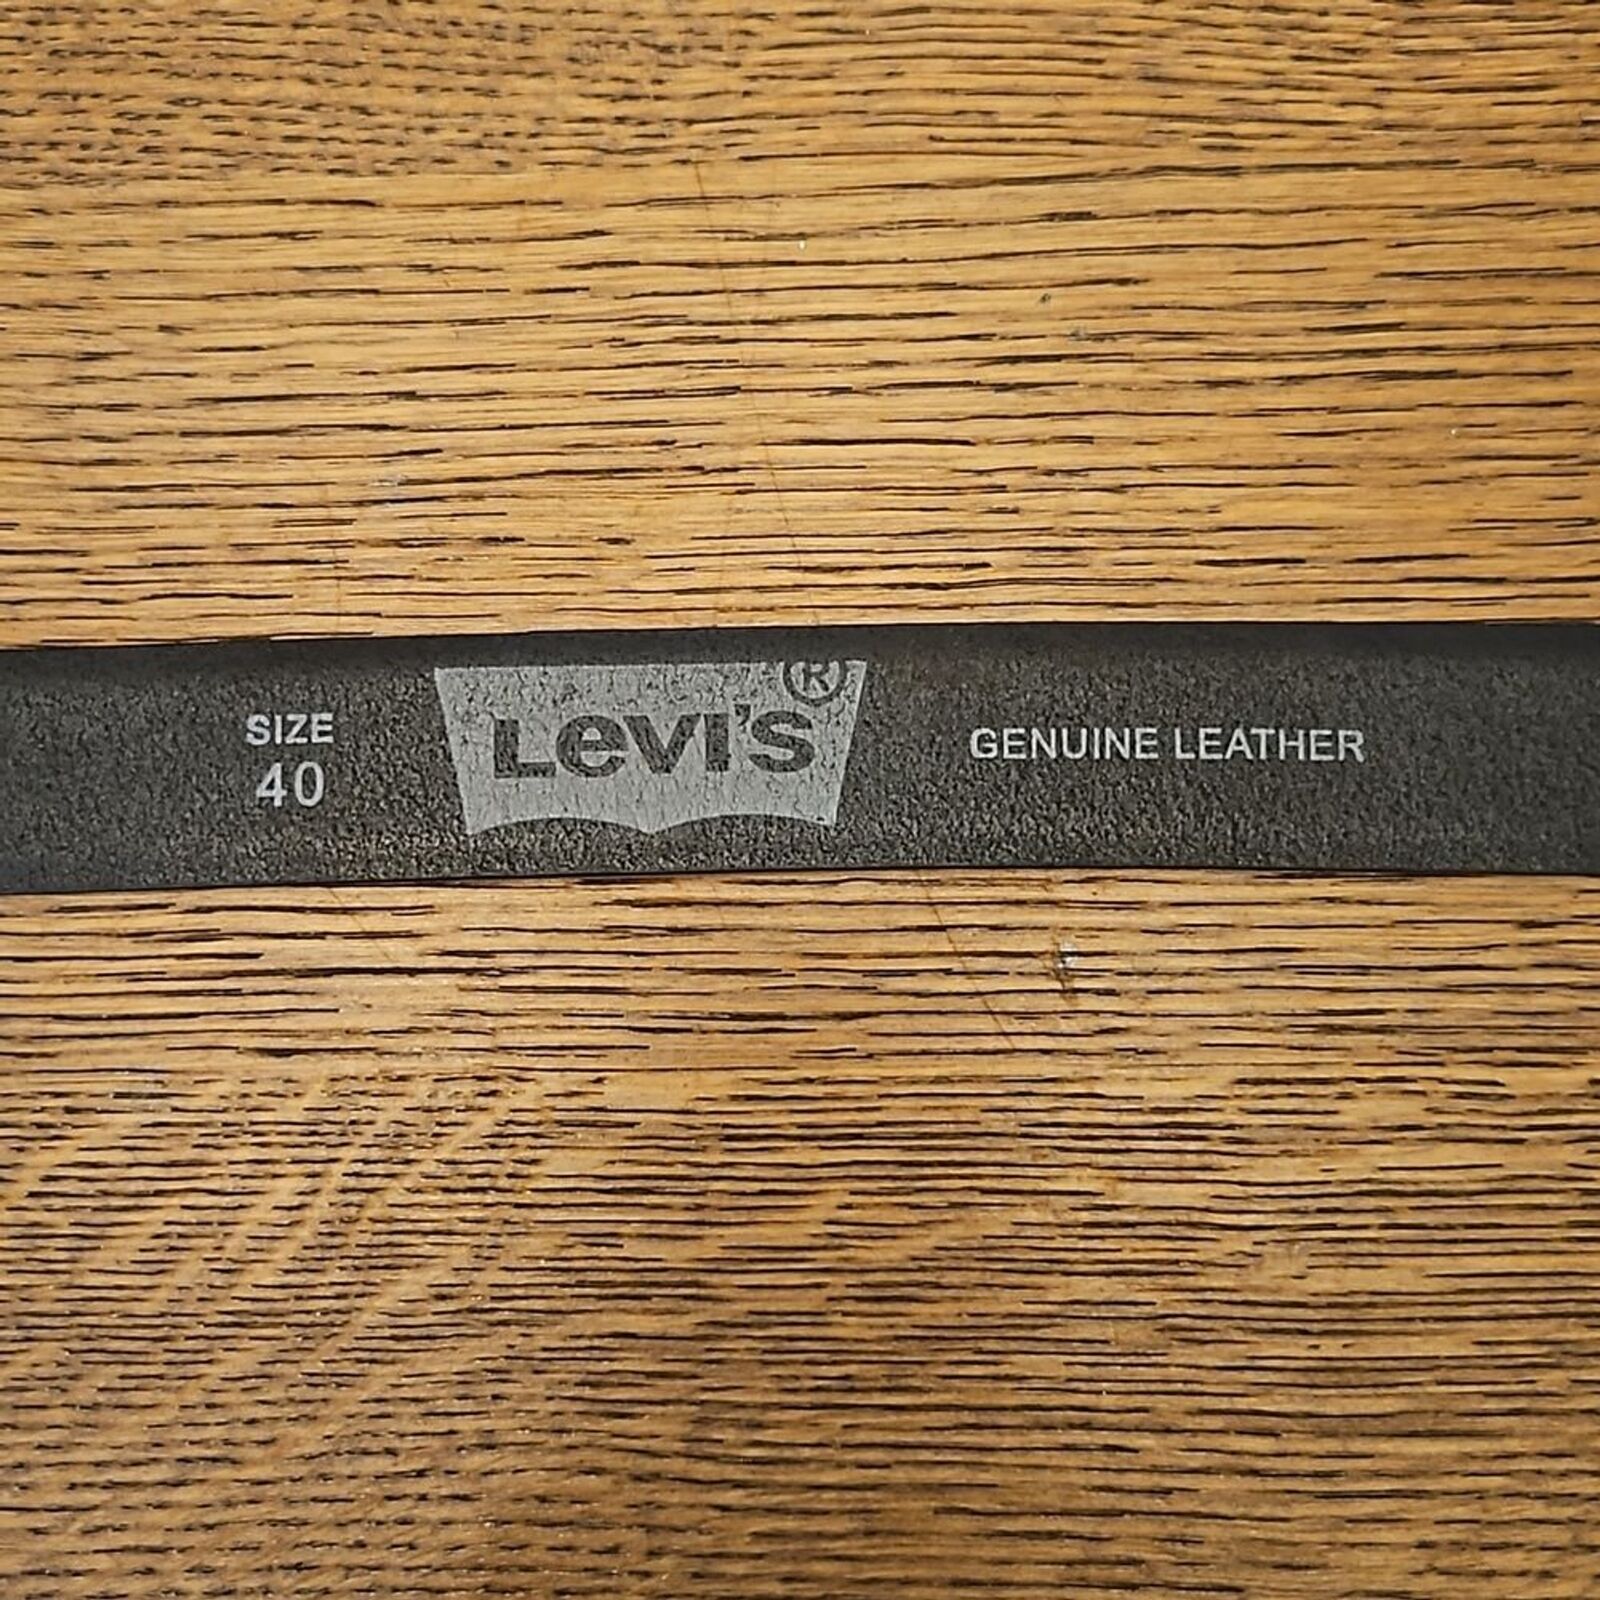 LEVI'S 40" Black Leather 1 3/8 Wide Belt Size 40 - image 2